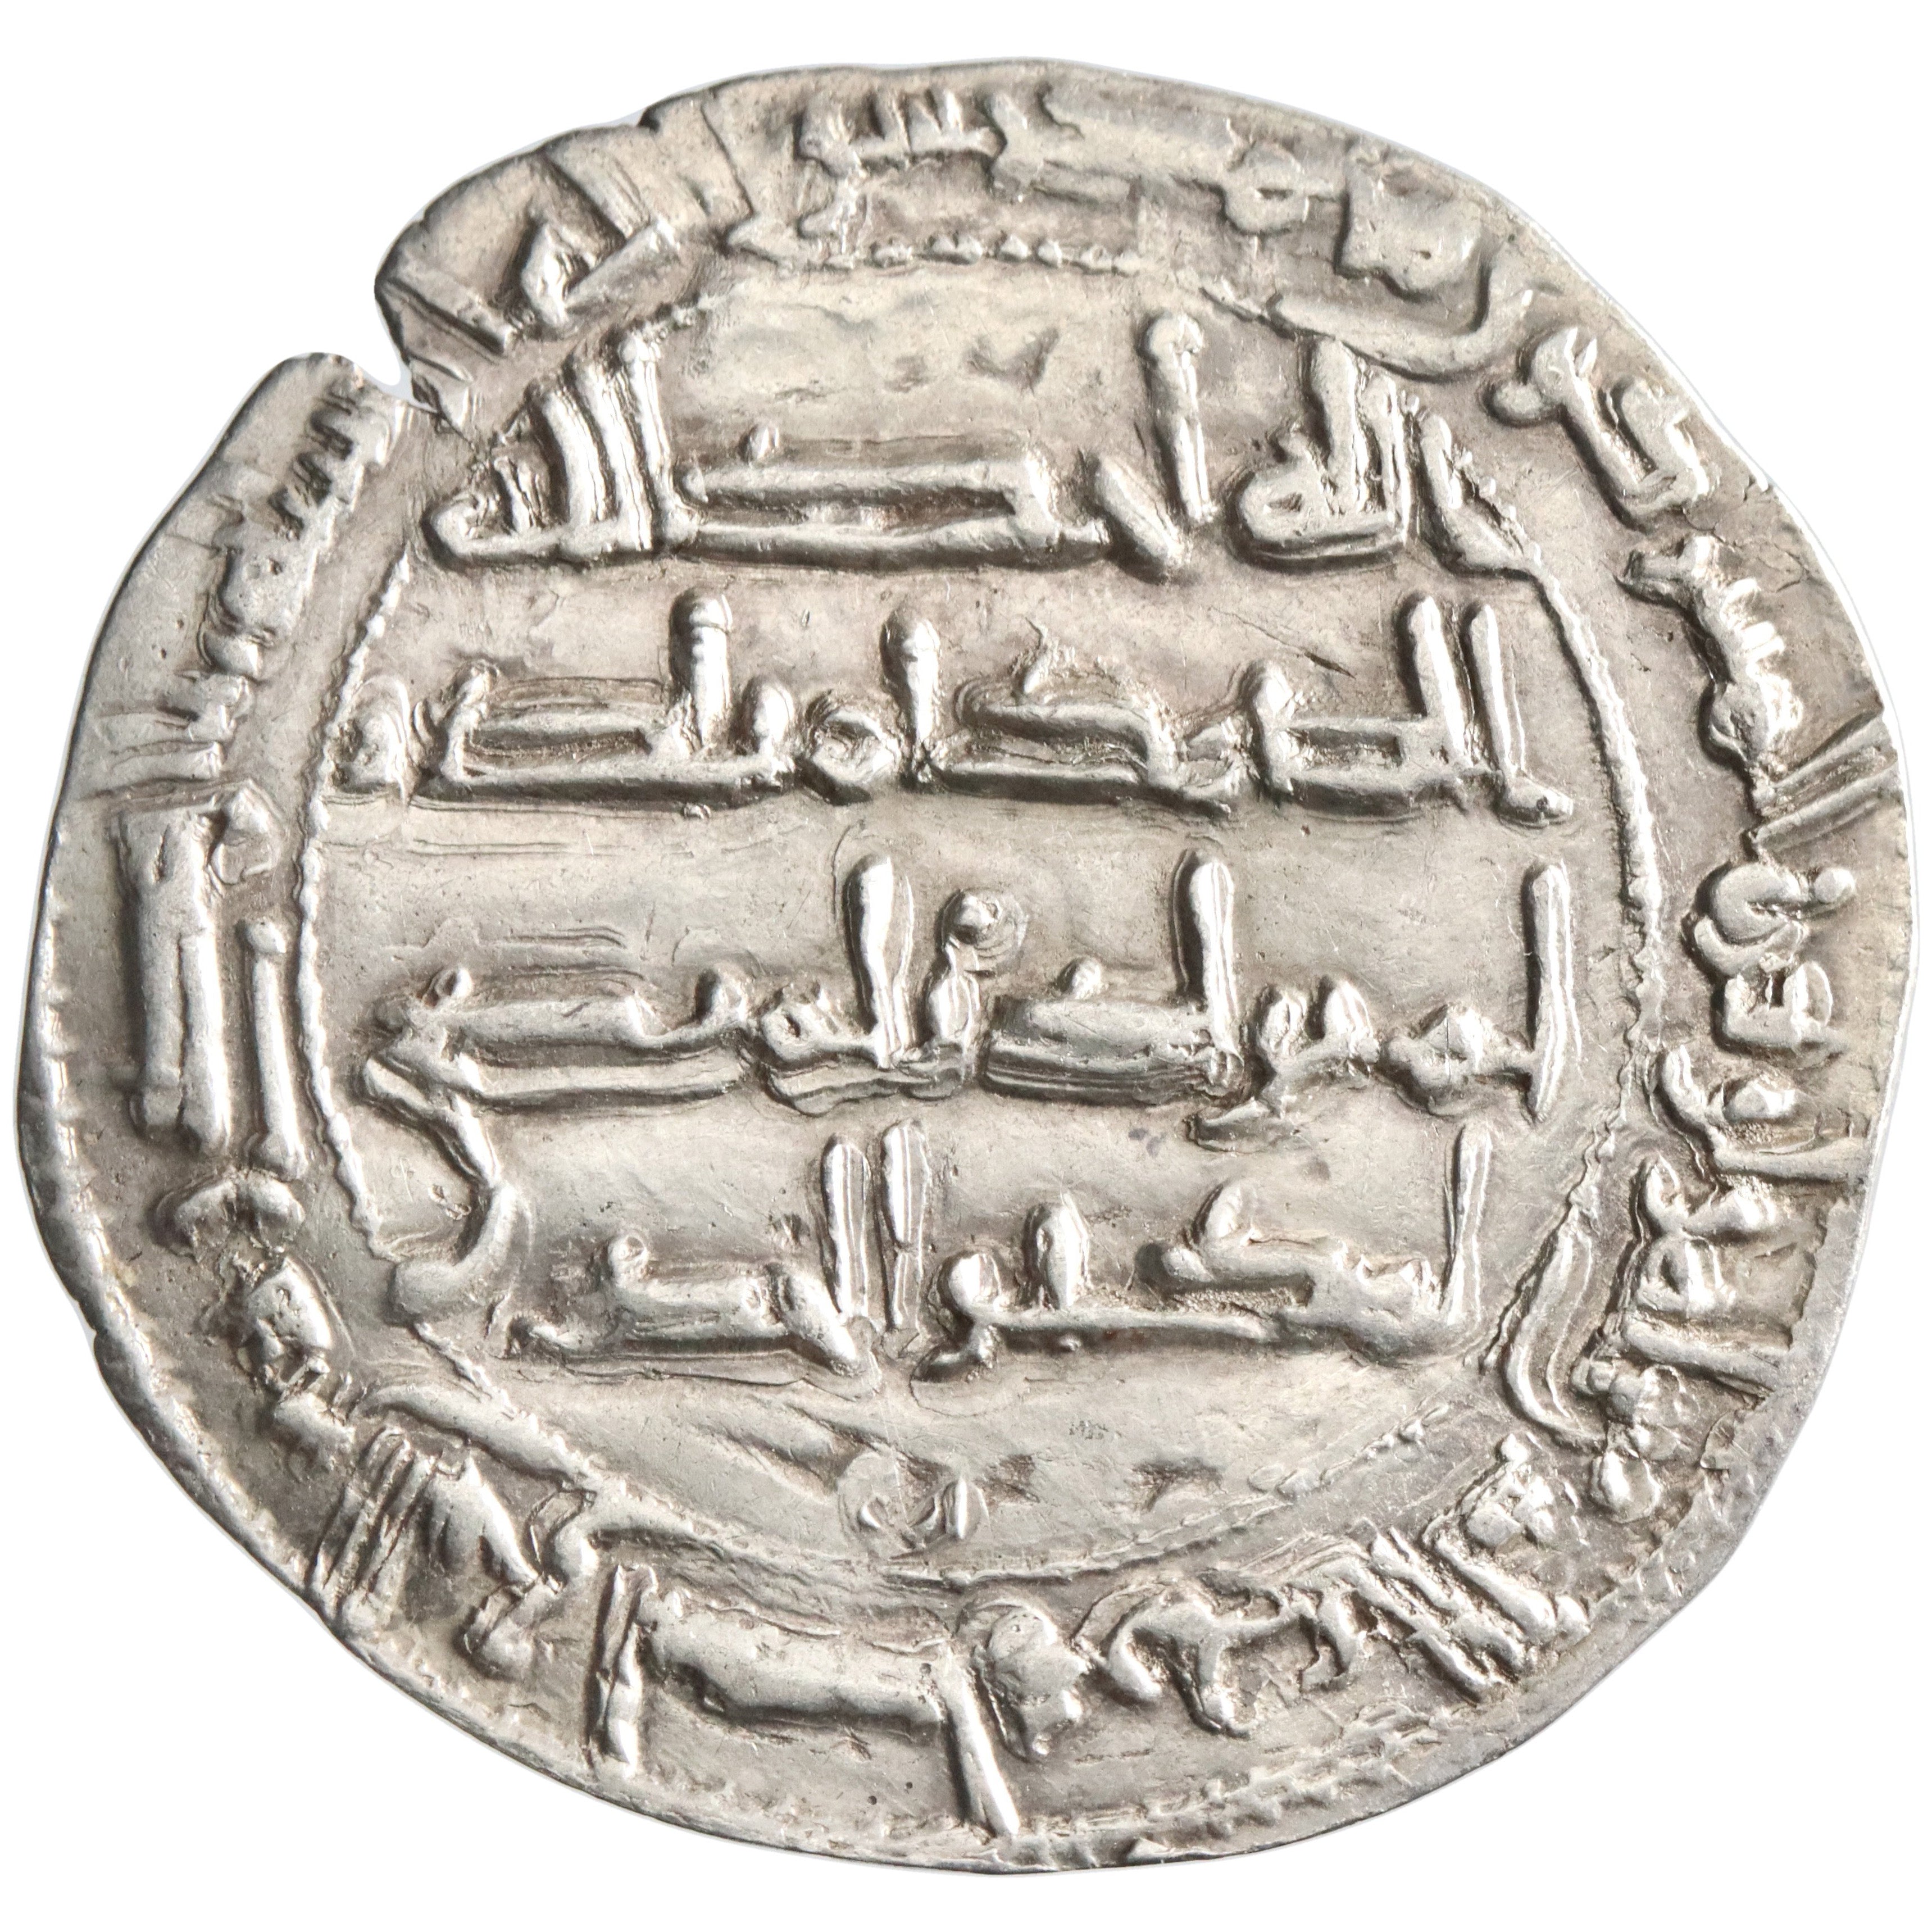 Umayyad of Spain, al-Hakam I, silver dirham, al-Andalus (Spain) mint, AH 190